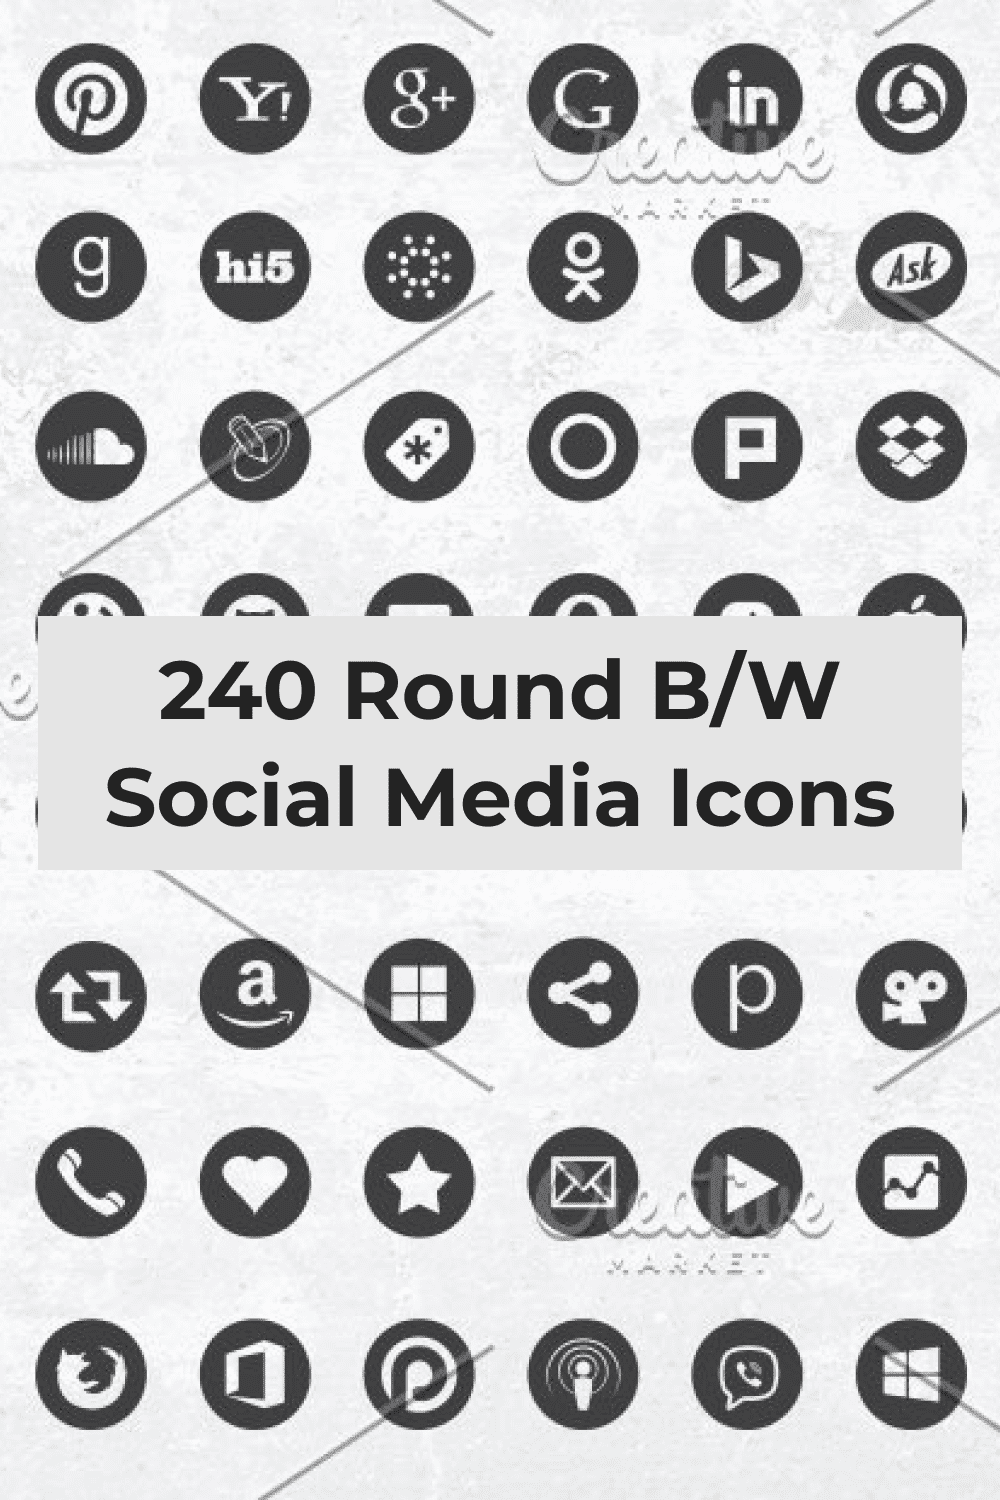 240 Round B/W Social Media Icons - Pinterest.